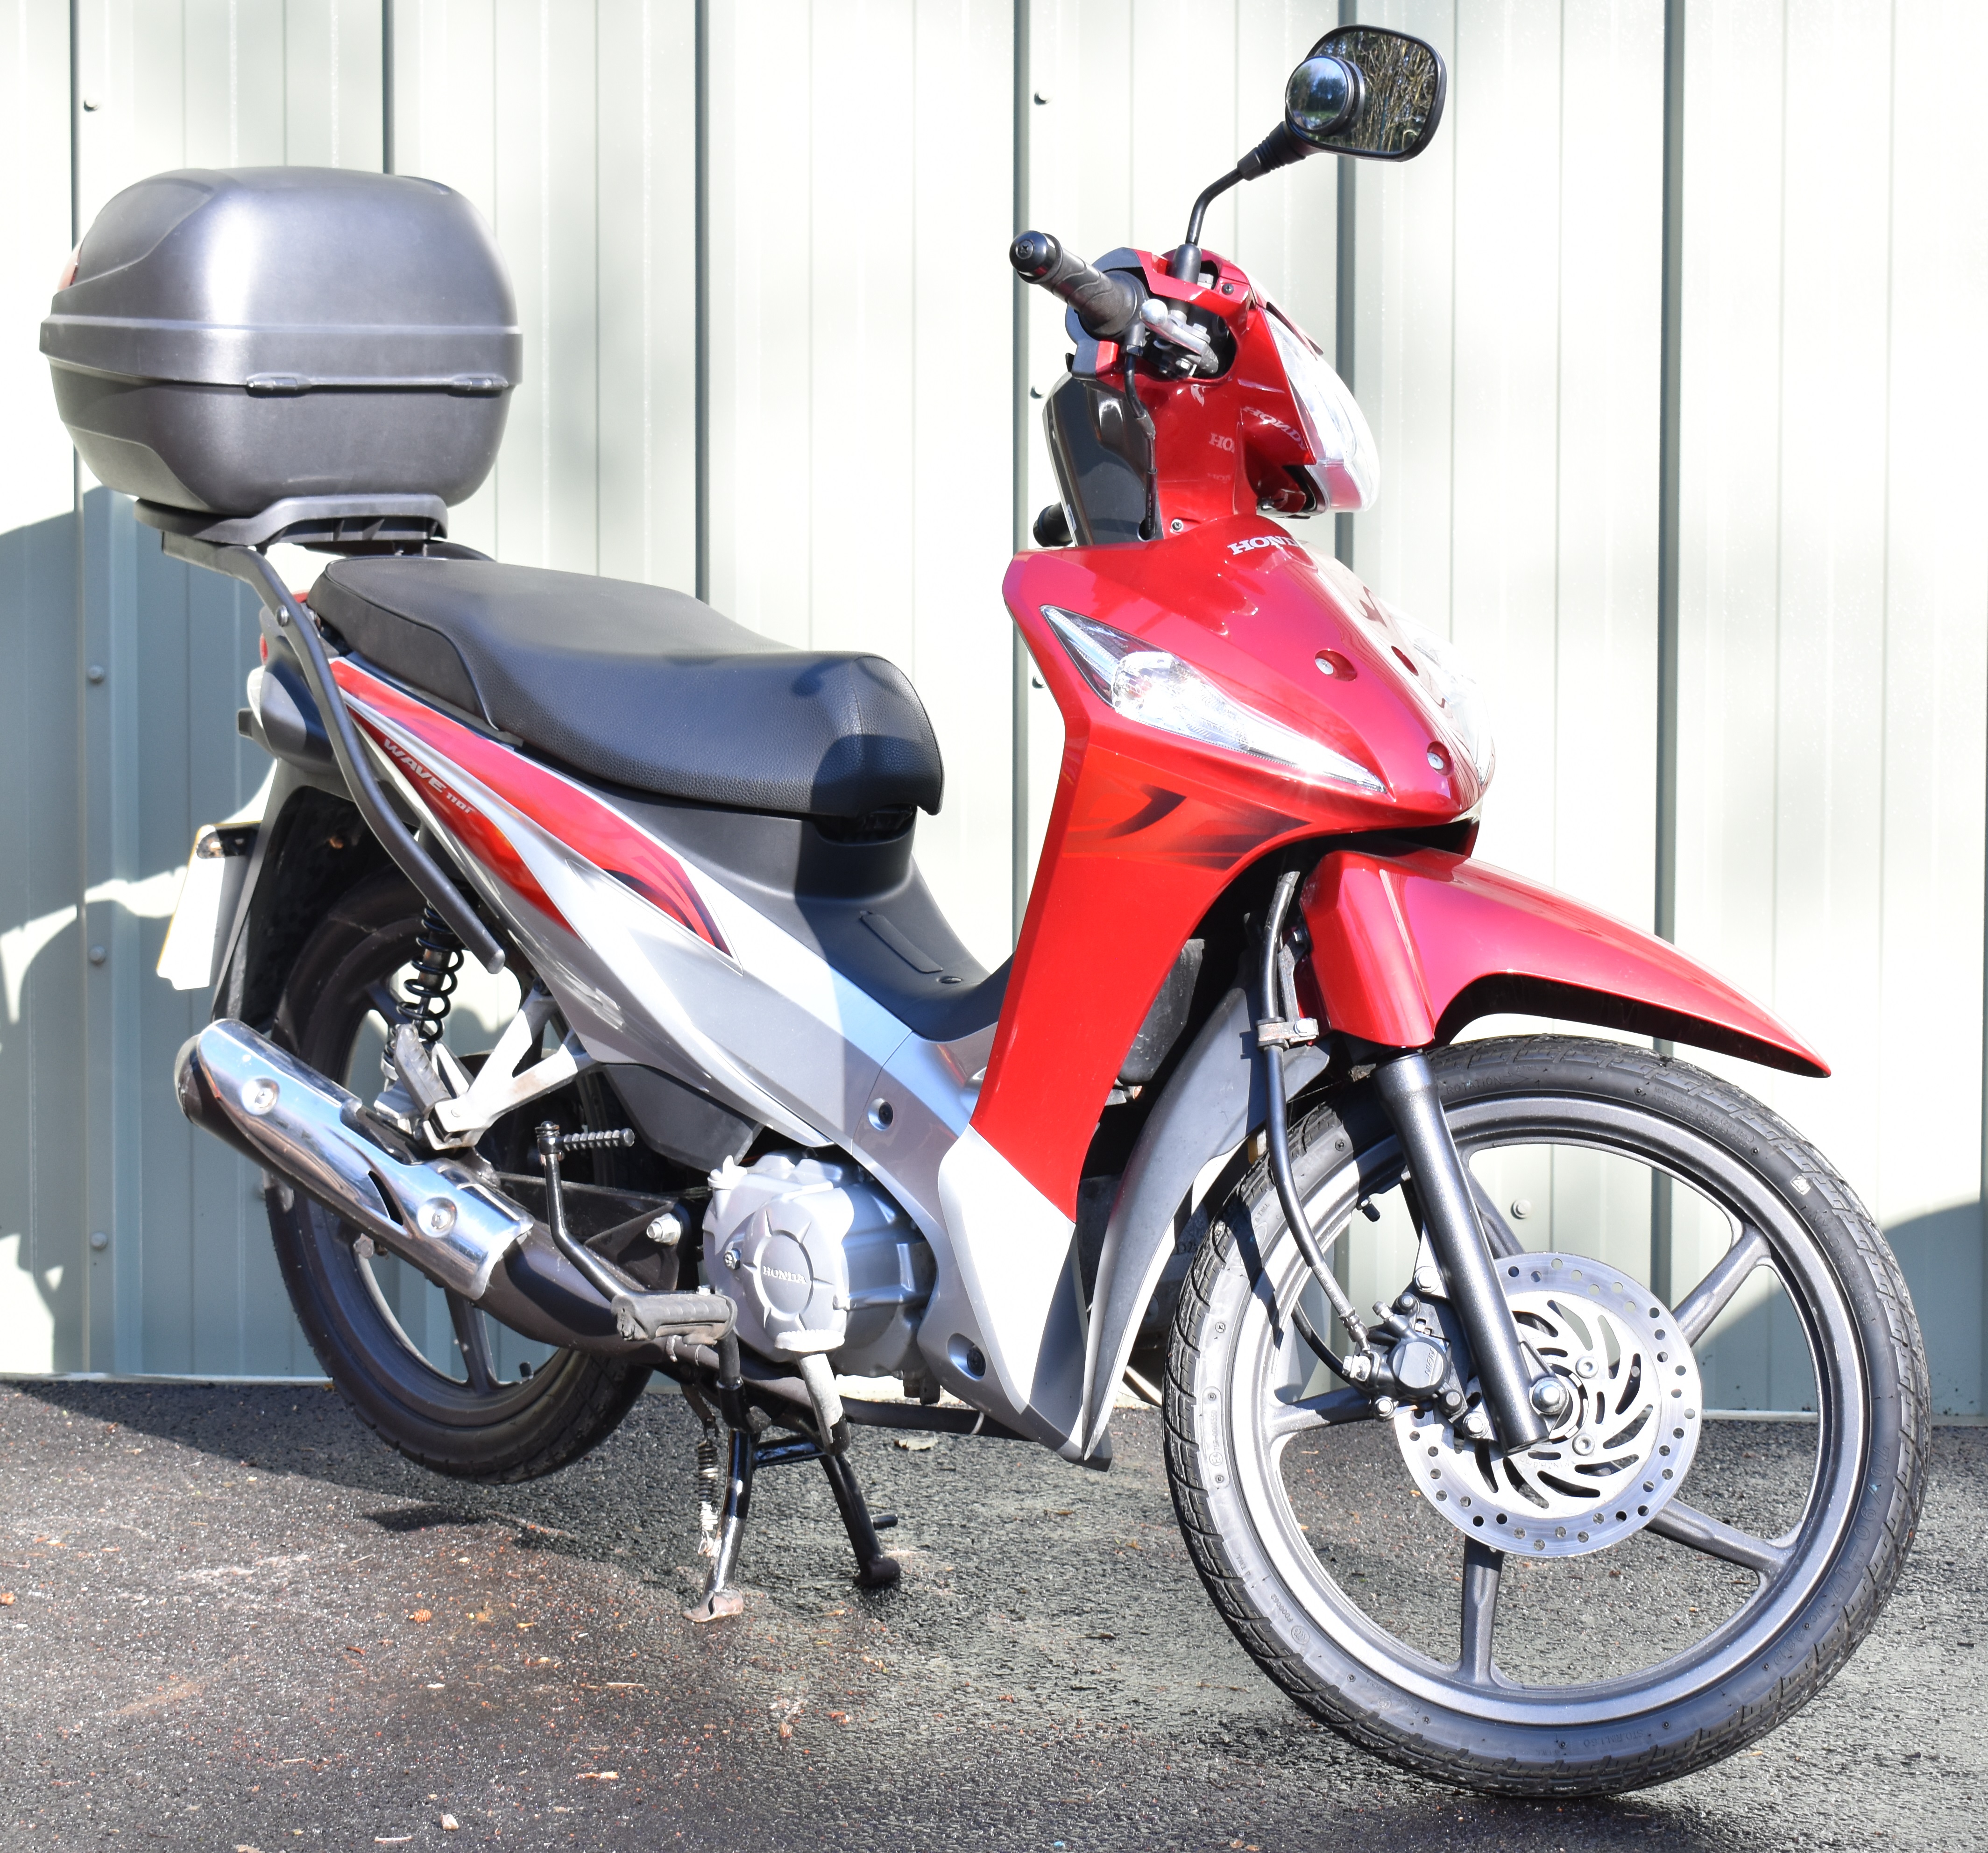 2014 Honda Wave four stroke 109cc motorcycle or scooter model AFS 110 2SHC, registration number CF63 - Image 14 of 17